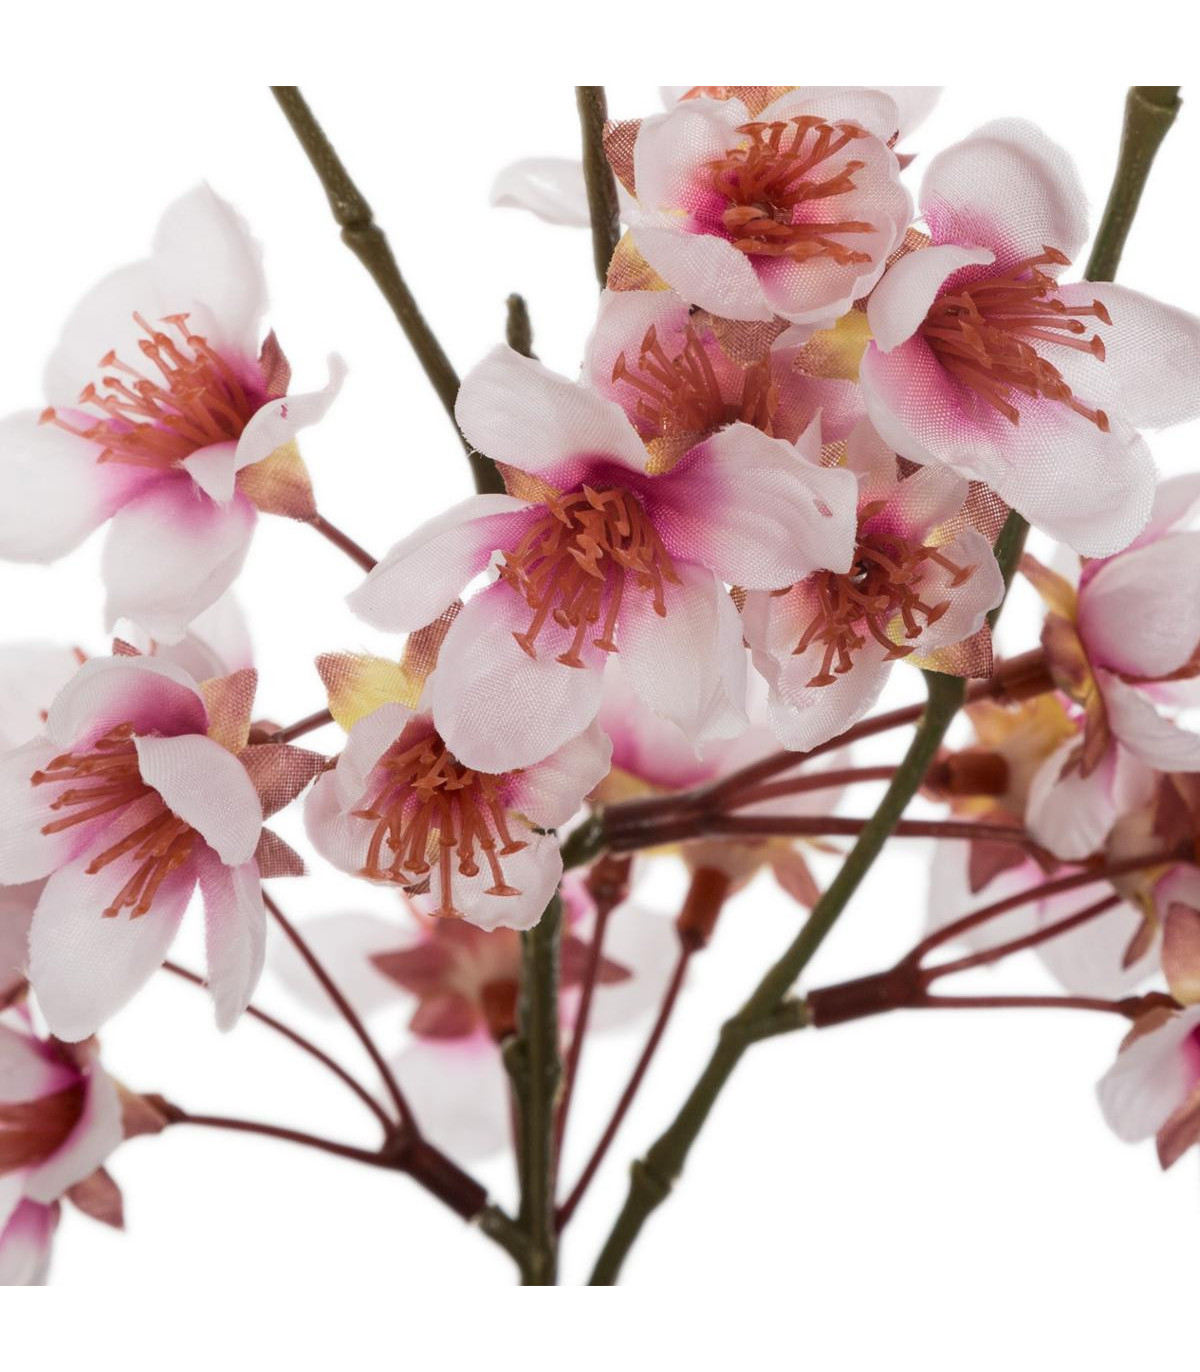 branche-de-cerisier-dans-vase-en-verre-bohemian-dream (2)